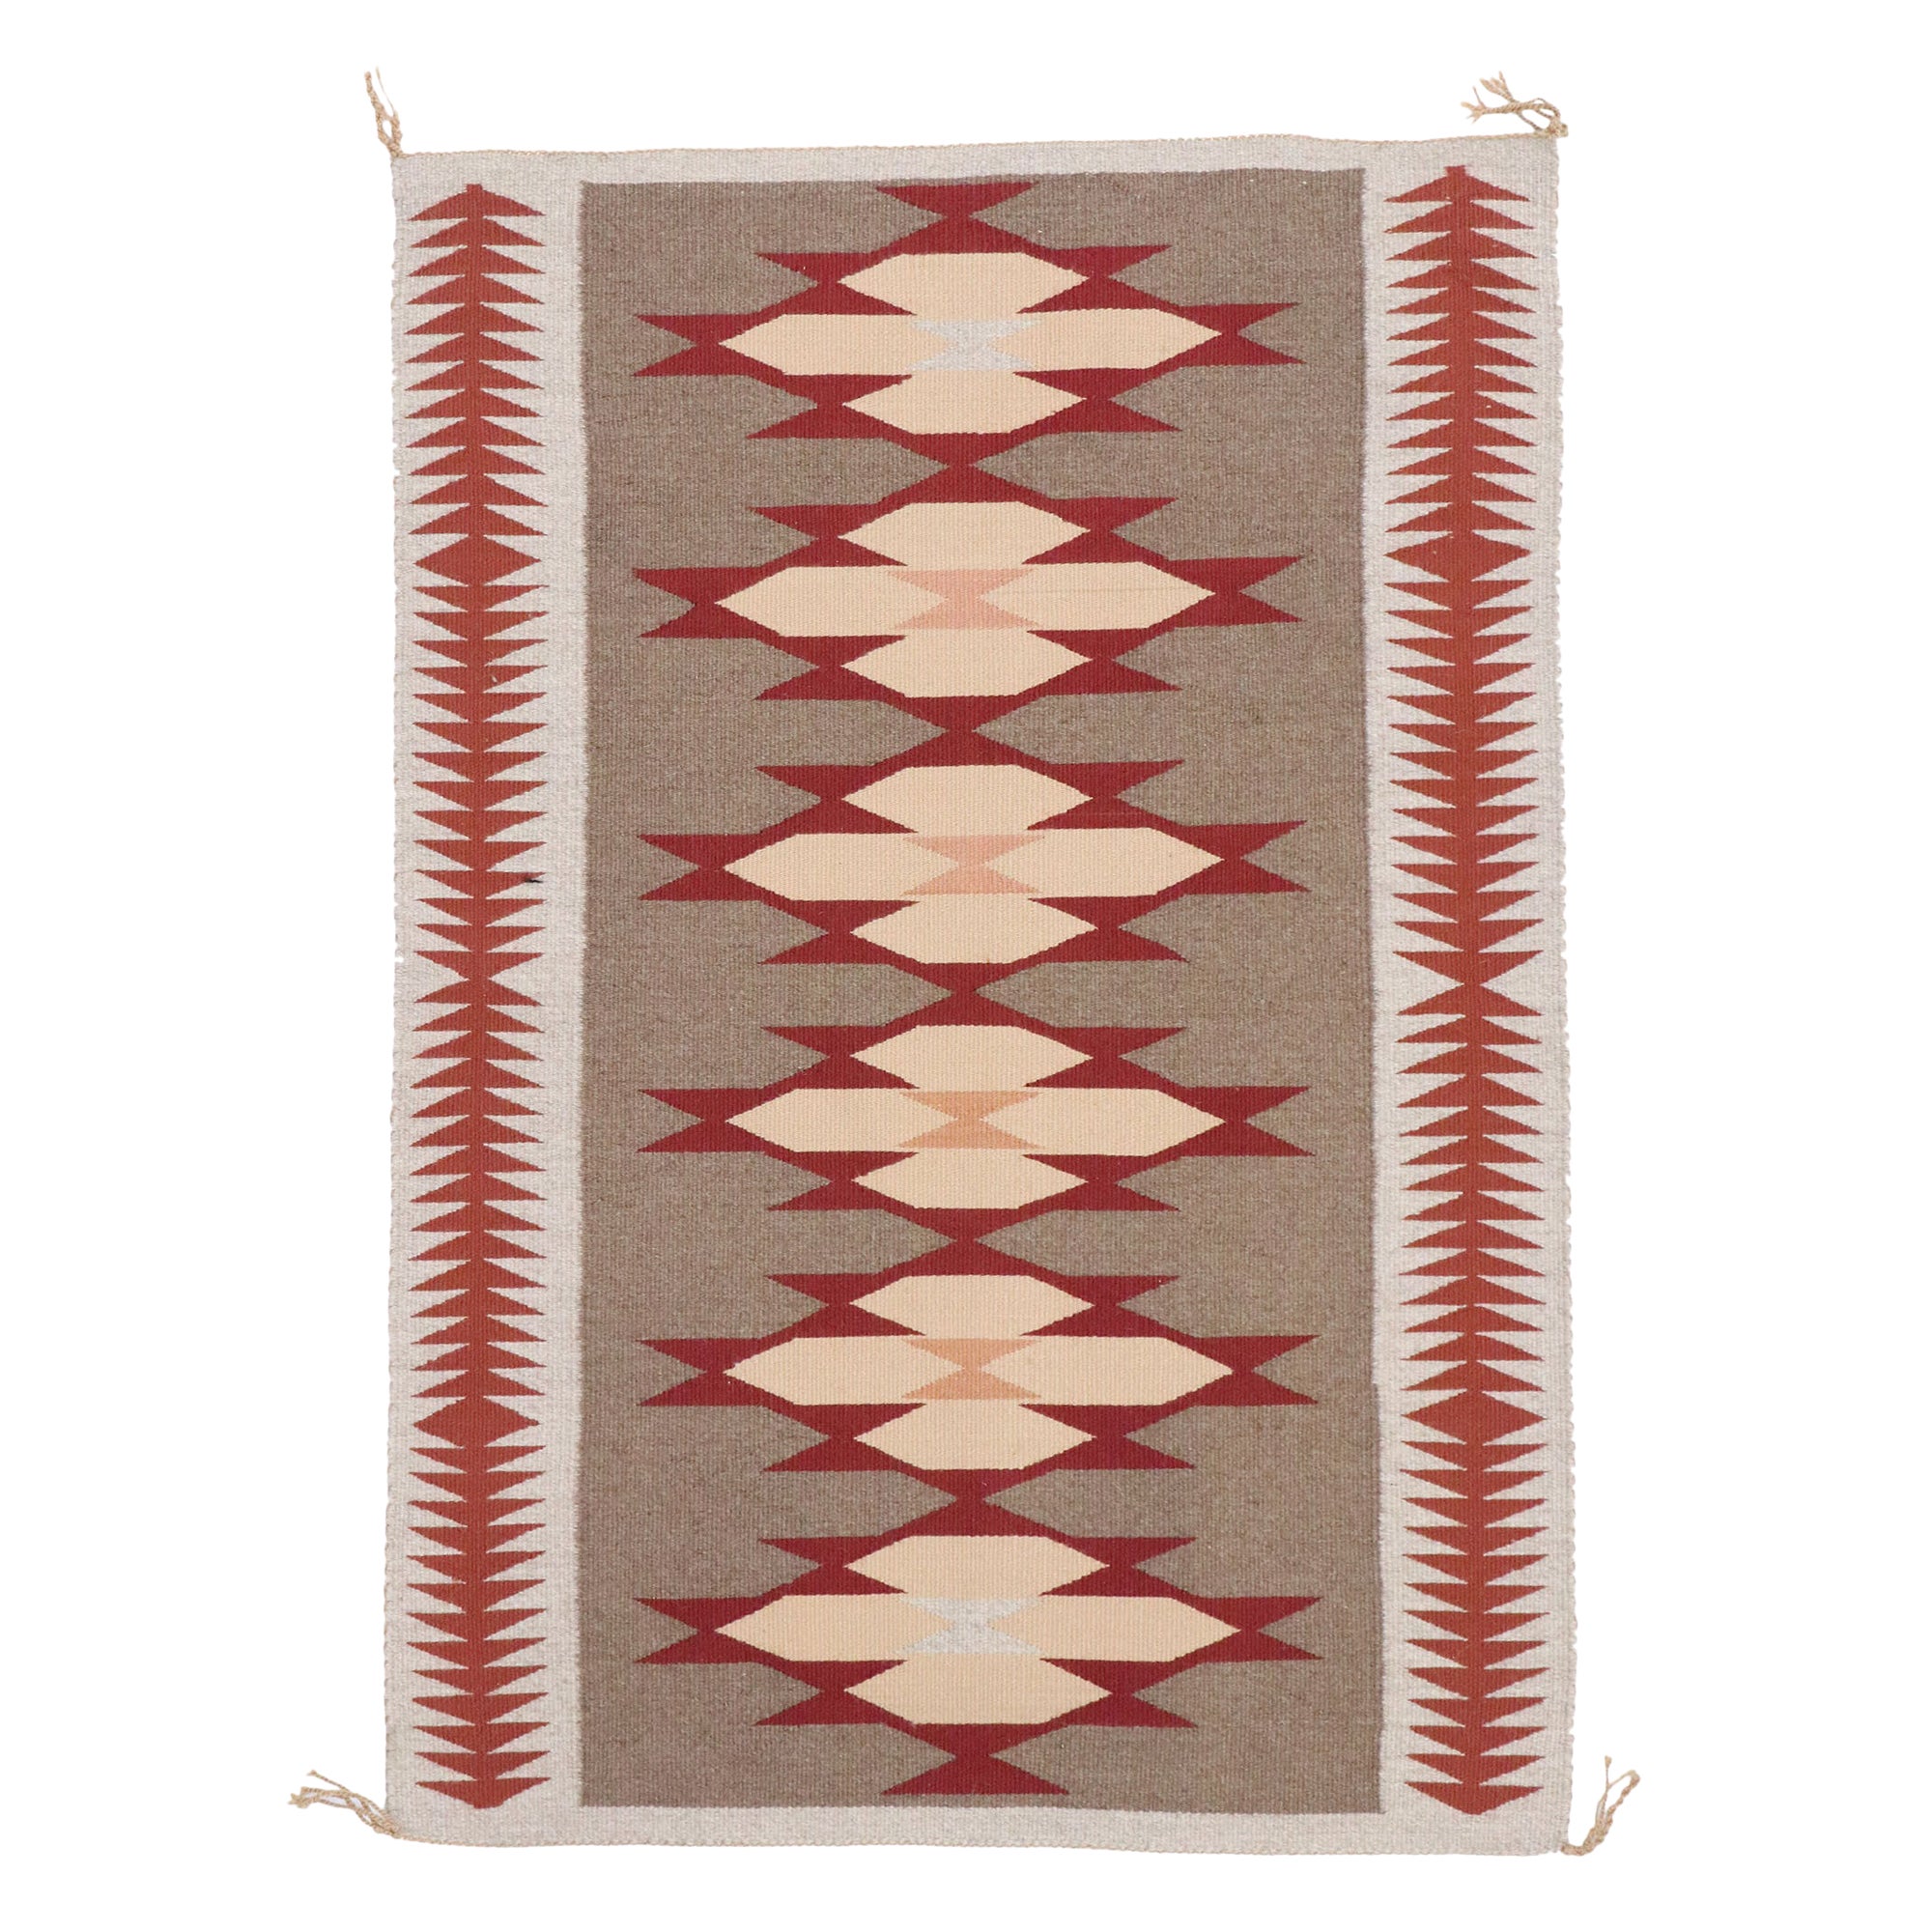 Vintage Navajo Kilim Rug with Southwestern Style